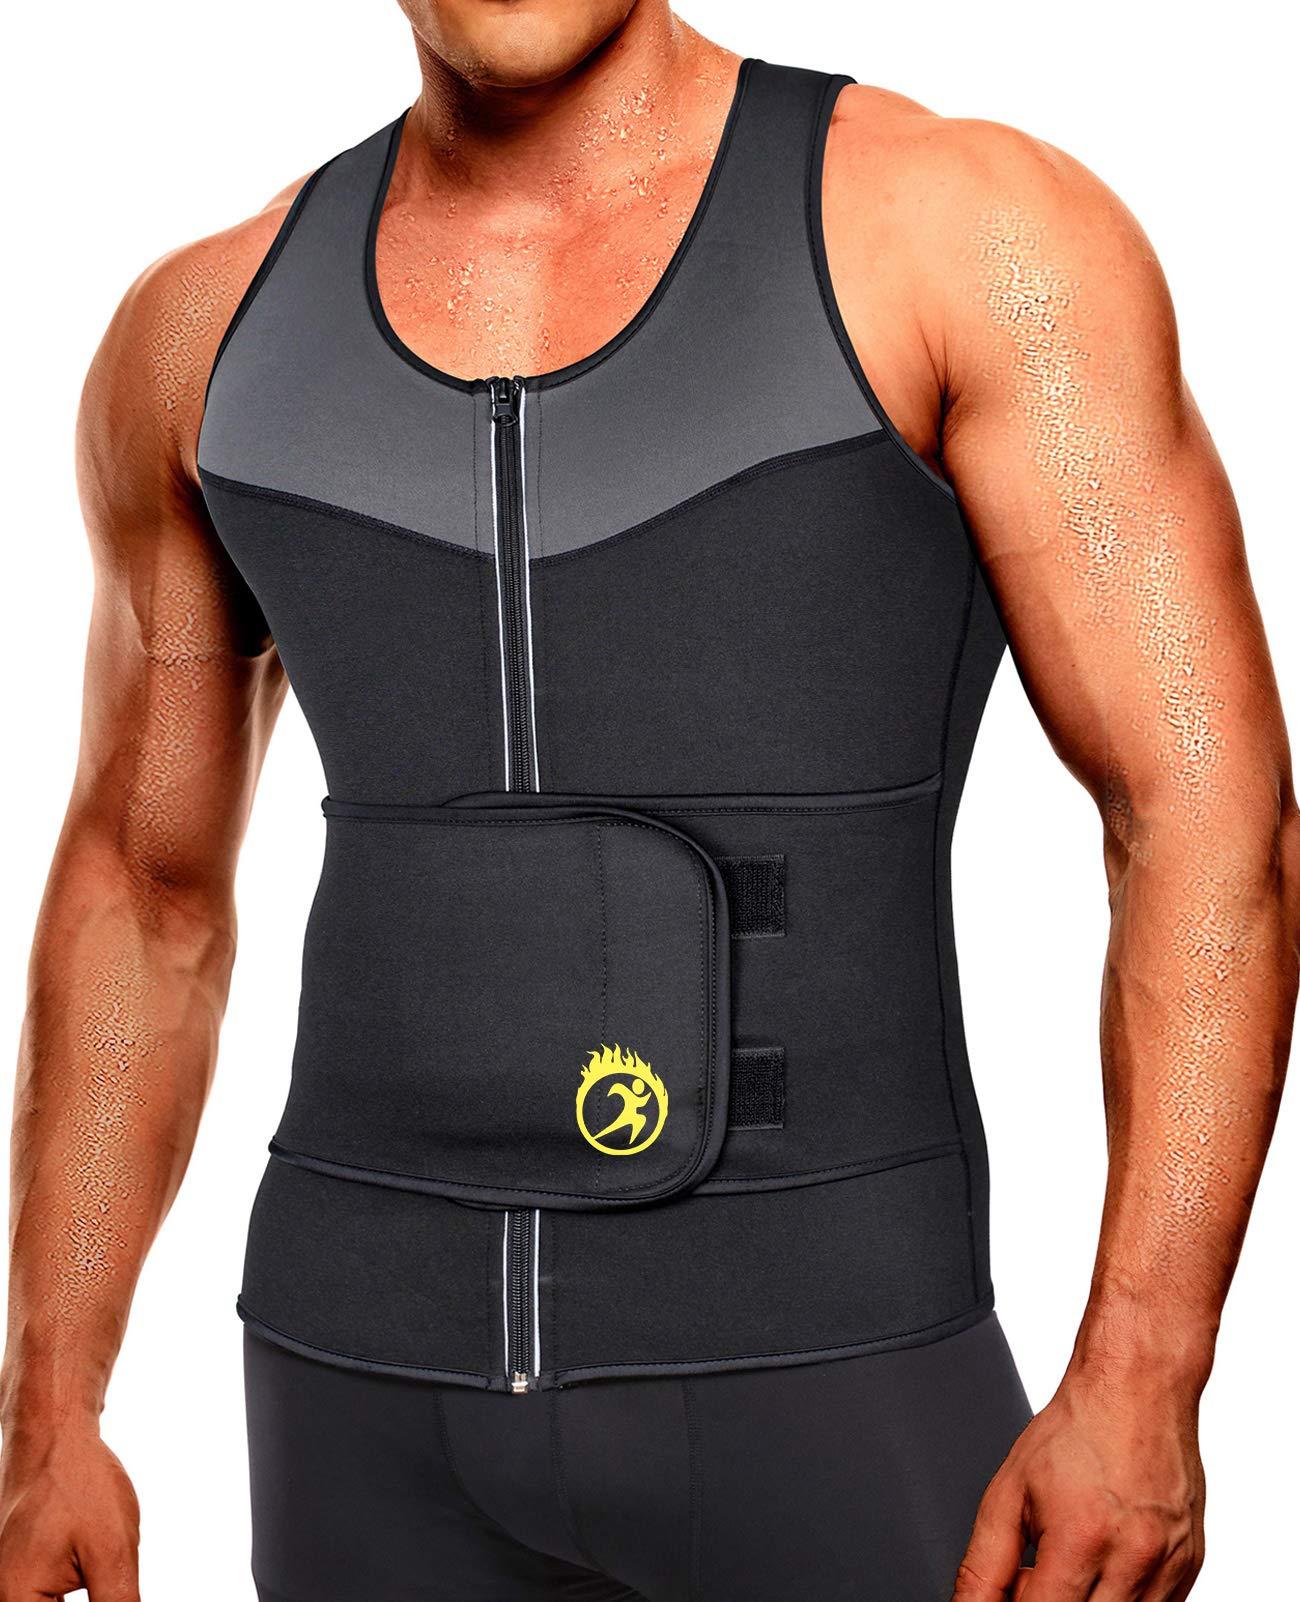 SEXYWG Mens Sauna Vest Waist Trainer - Sweat Vest For Men With Waist Trimmer Workout Shaper Control Tummy Belt Jackets Neoprene Sauna Suit